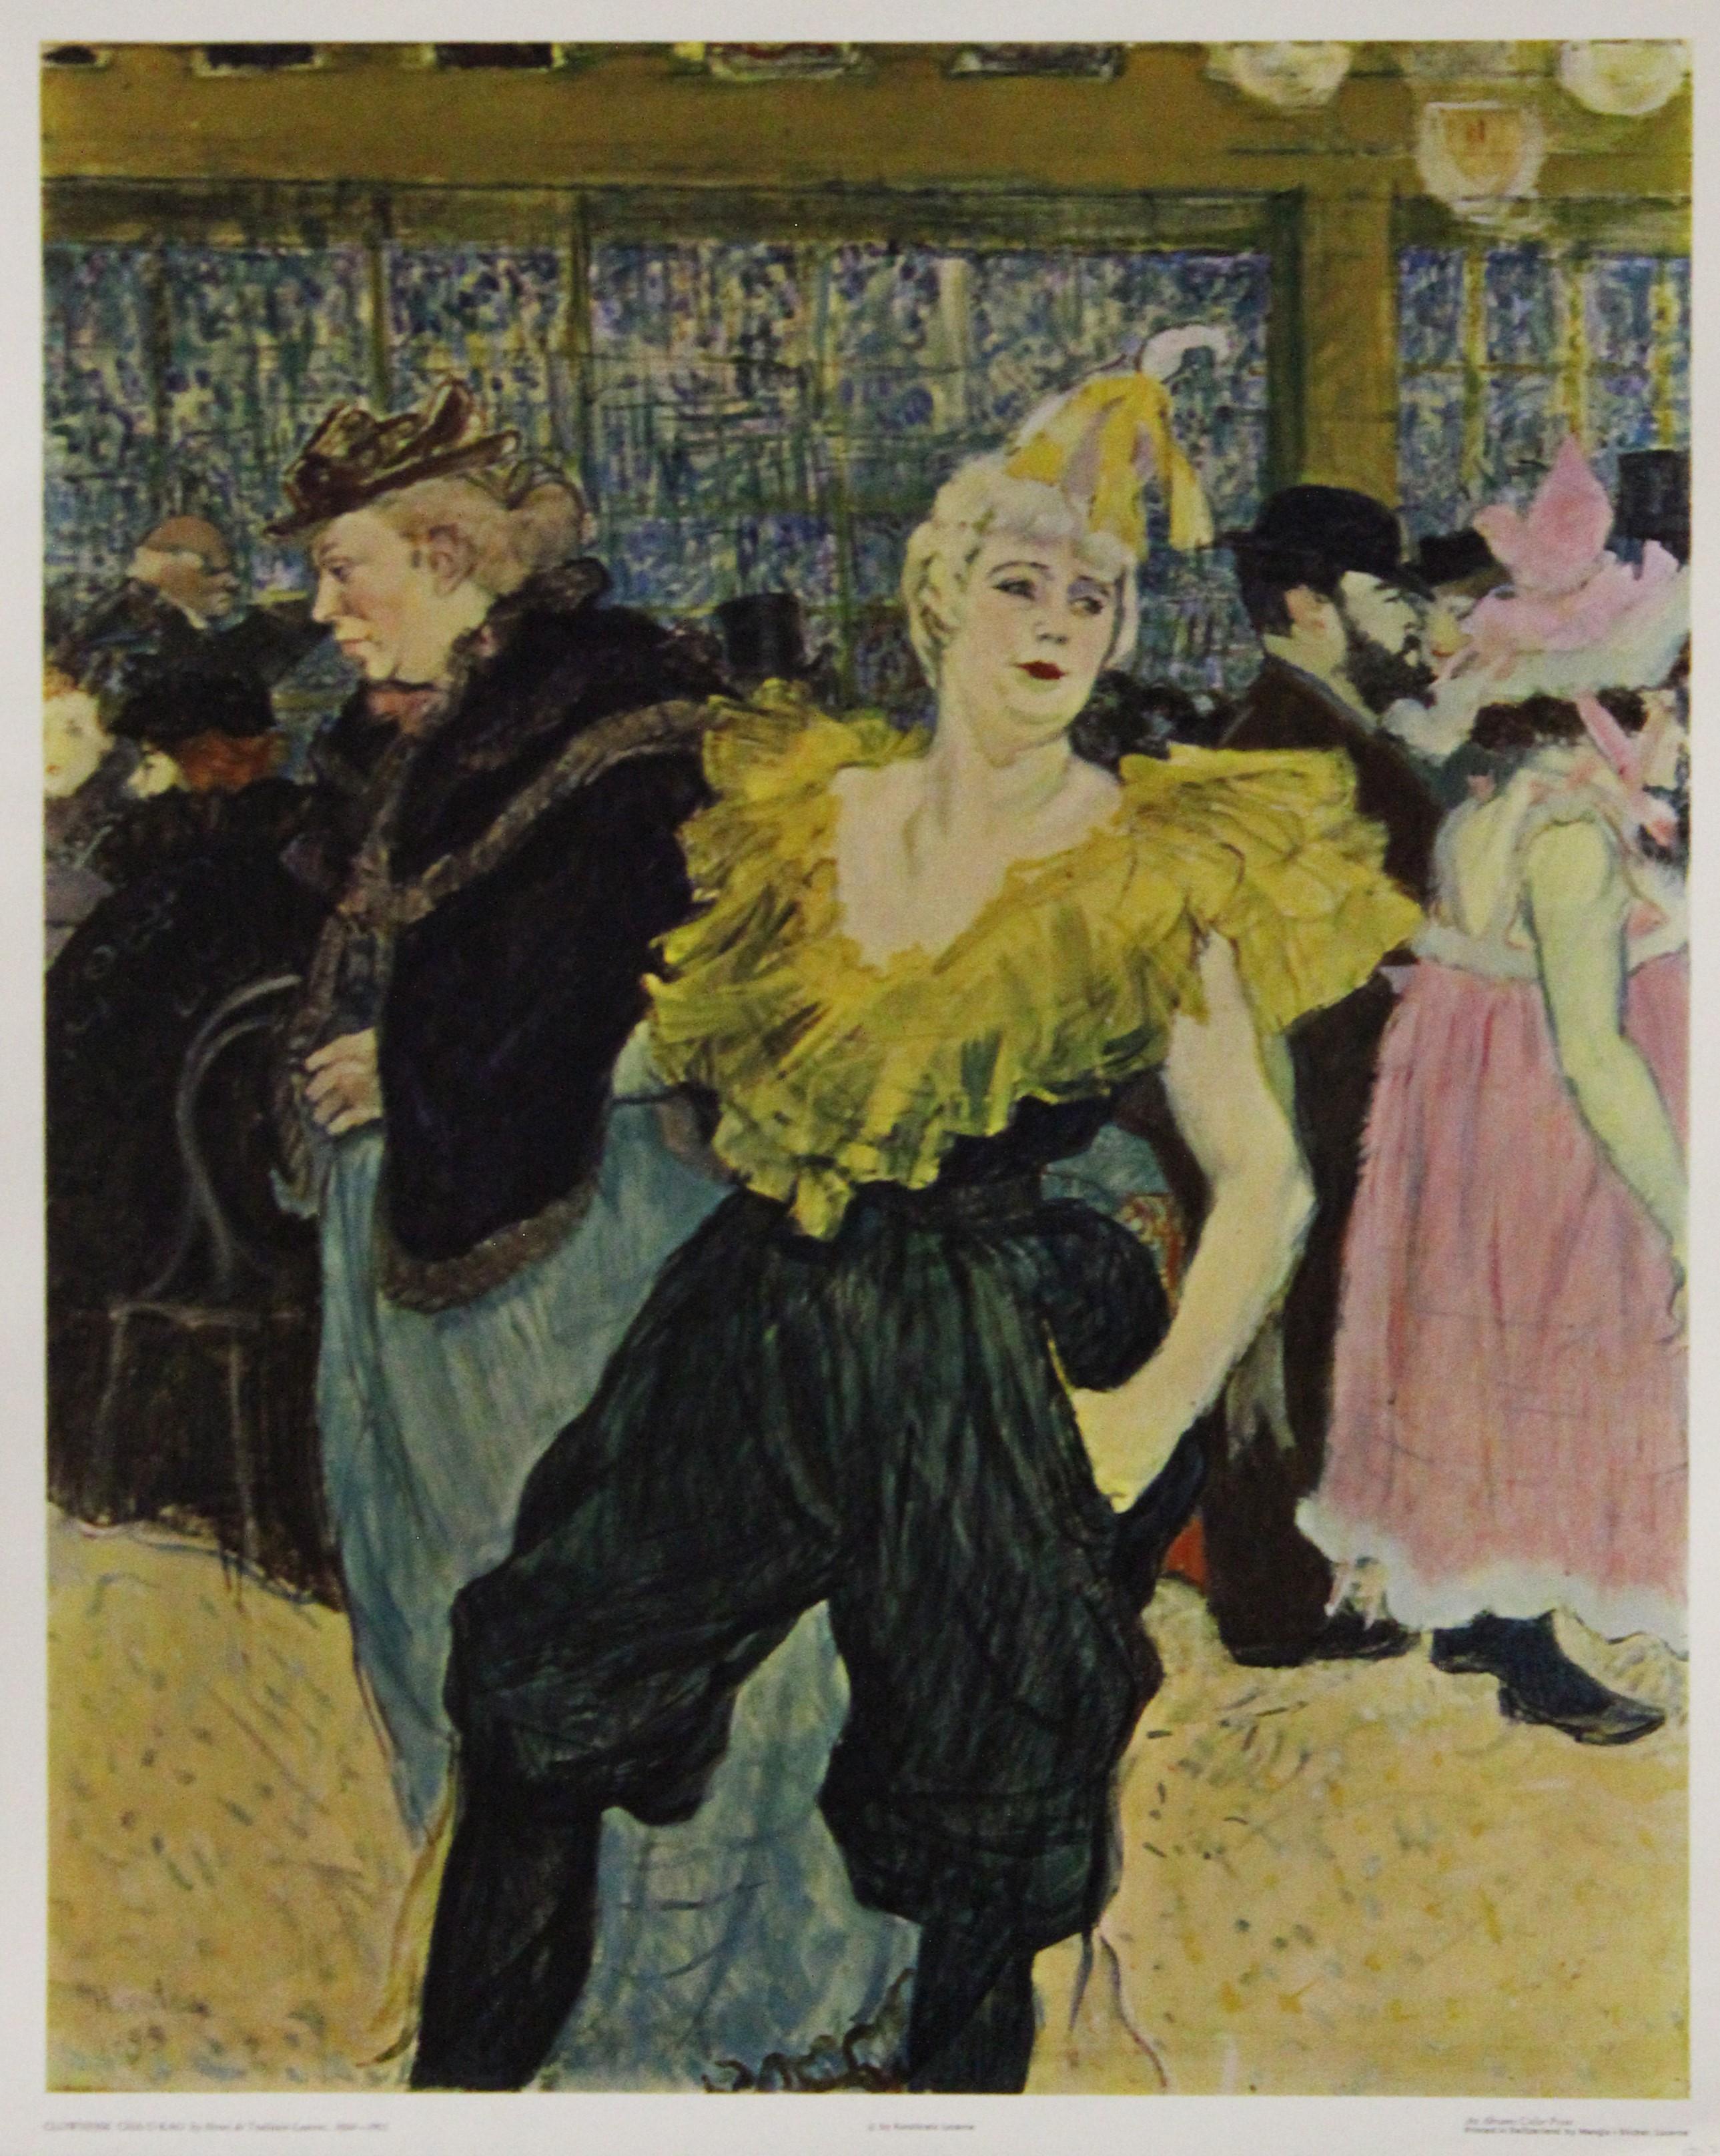 Henri de Toulouse-Lautrec Portrait Print - "Clownesse Cha-U-Kao" Poster. Printed in Switzerland.